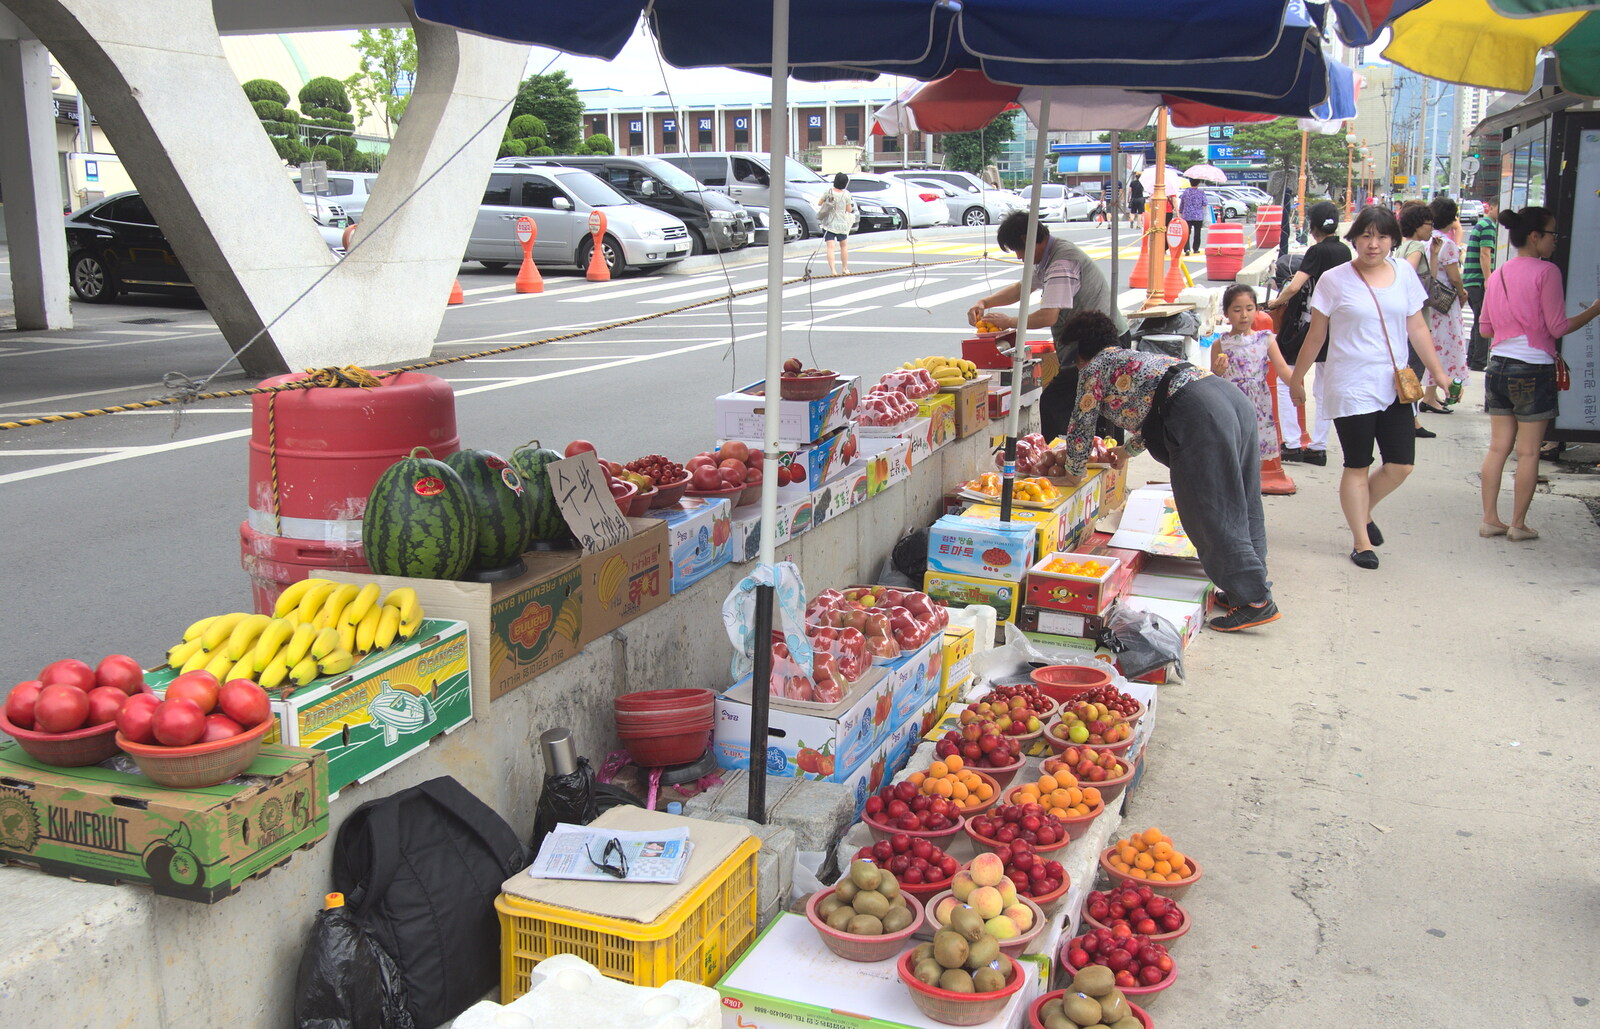 More fruit on the street from Seomun Market, Daegu, South Korea - 1st July 2012